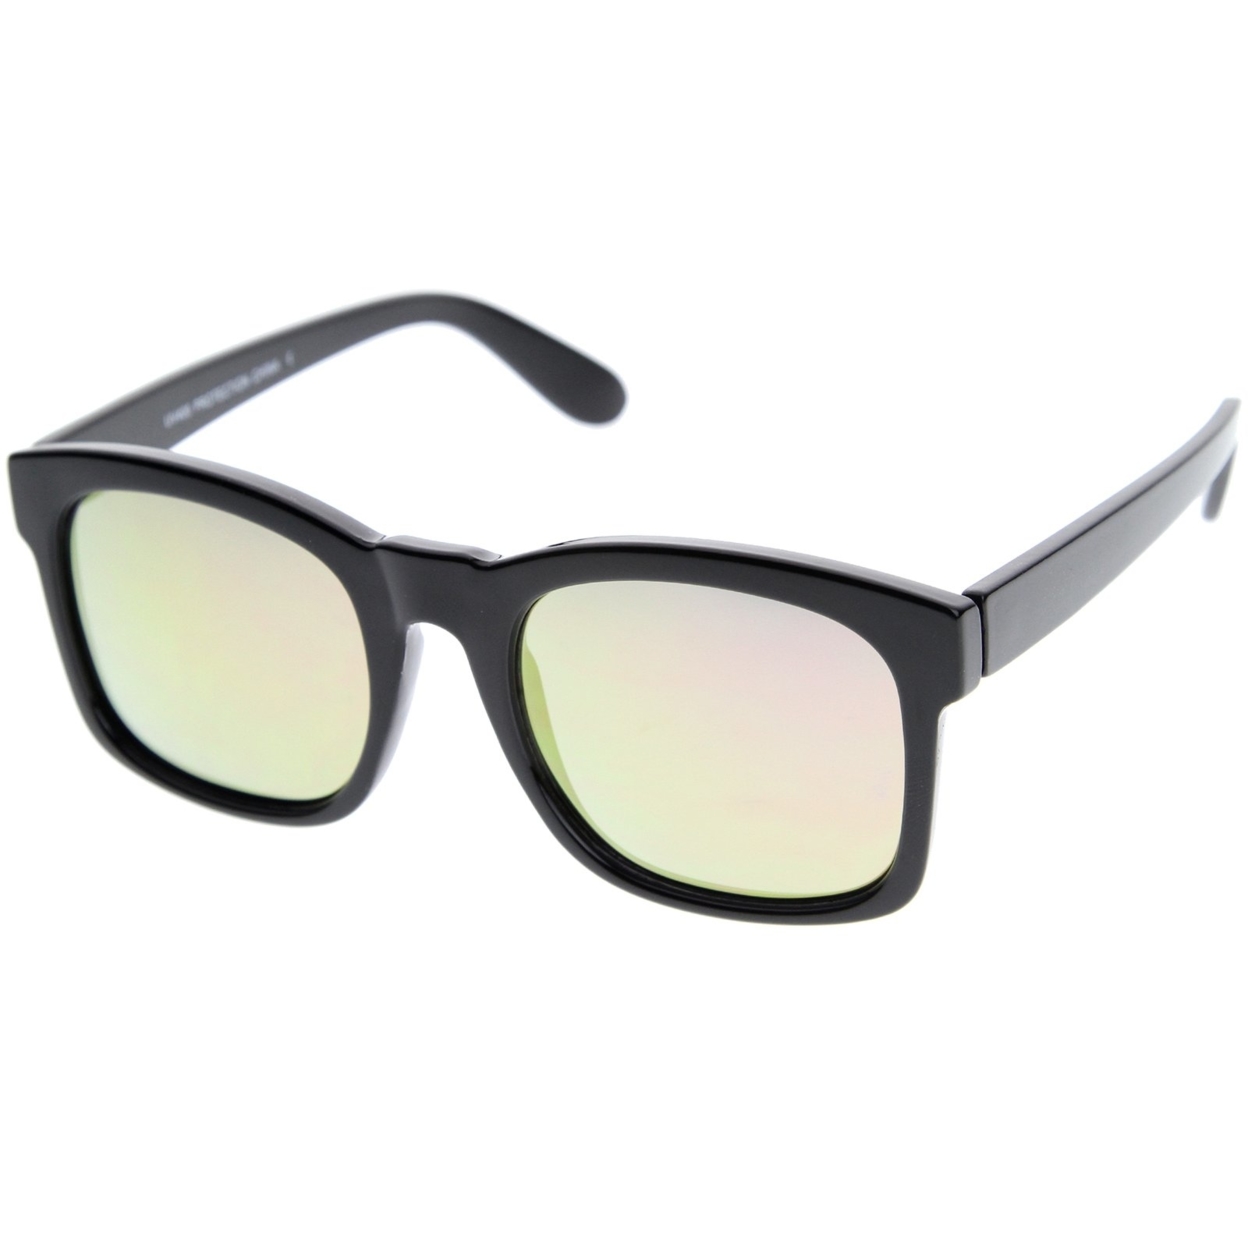 Mod Fashion Oversized Bold Frame Flash Mirror Horn Rimmed Sunglasses 61mm - Black / Magenta